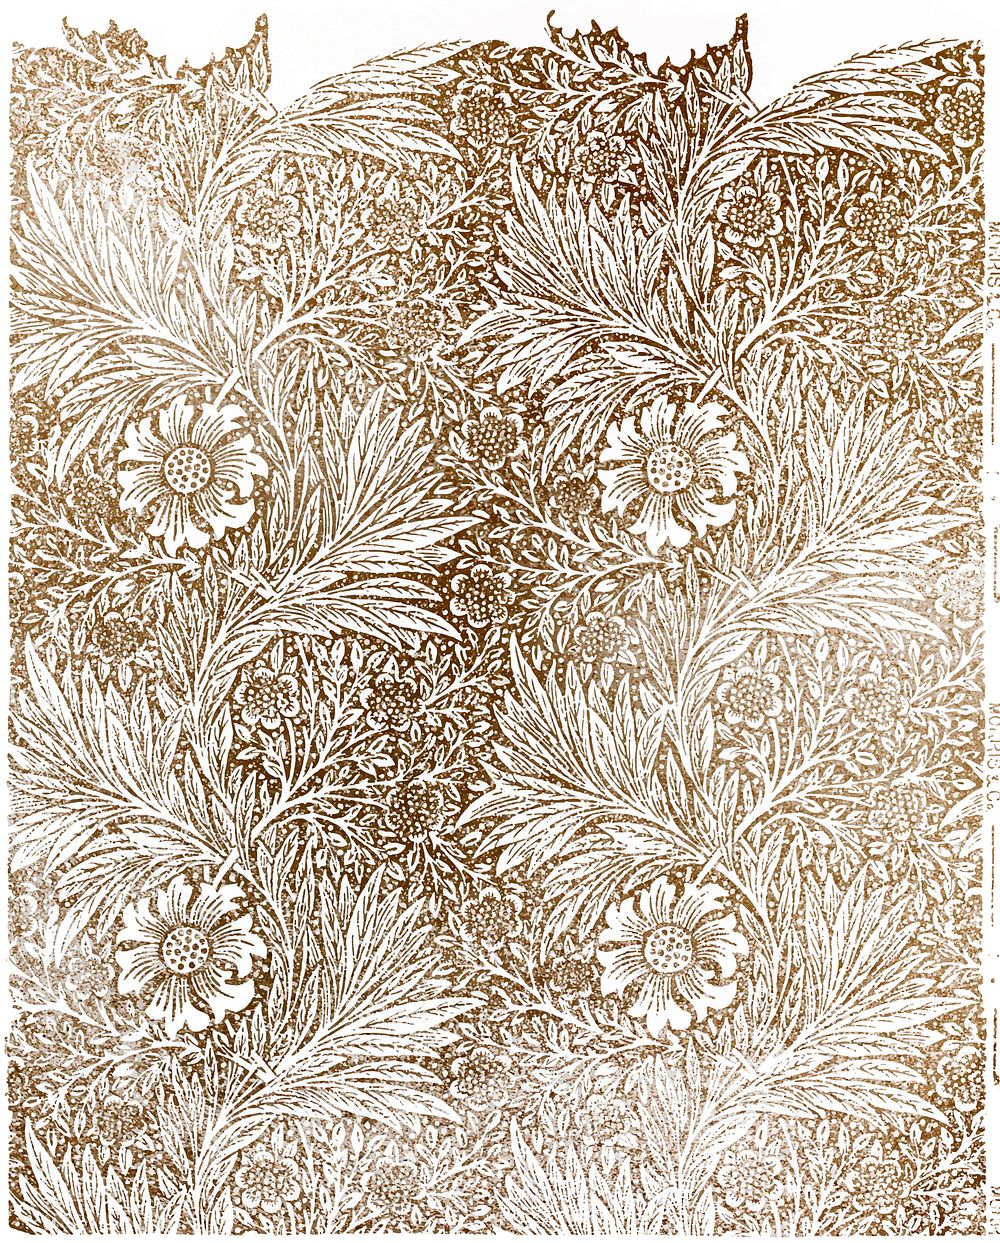 Marigold wallpaper vintage design, remix from original artwork by William Morris